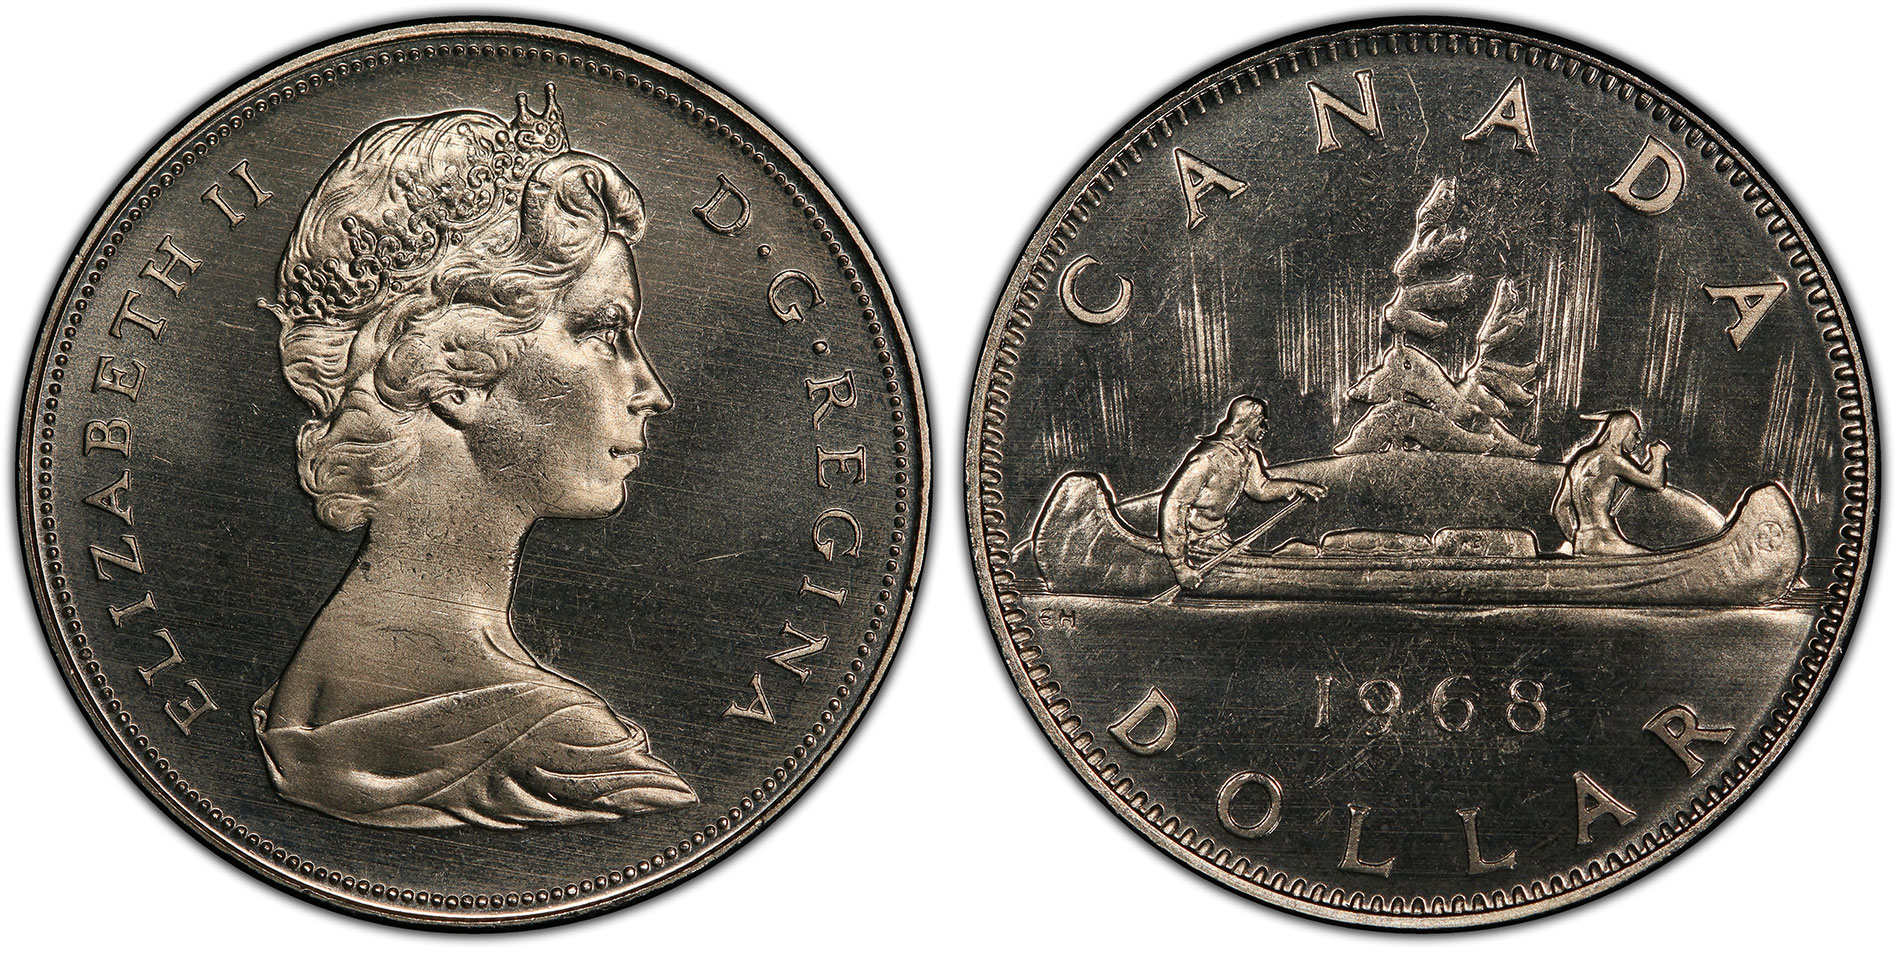 Canada 1968 Proof Like Voyageur Nickel Dollar!!